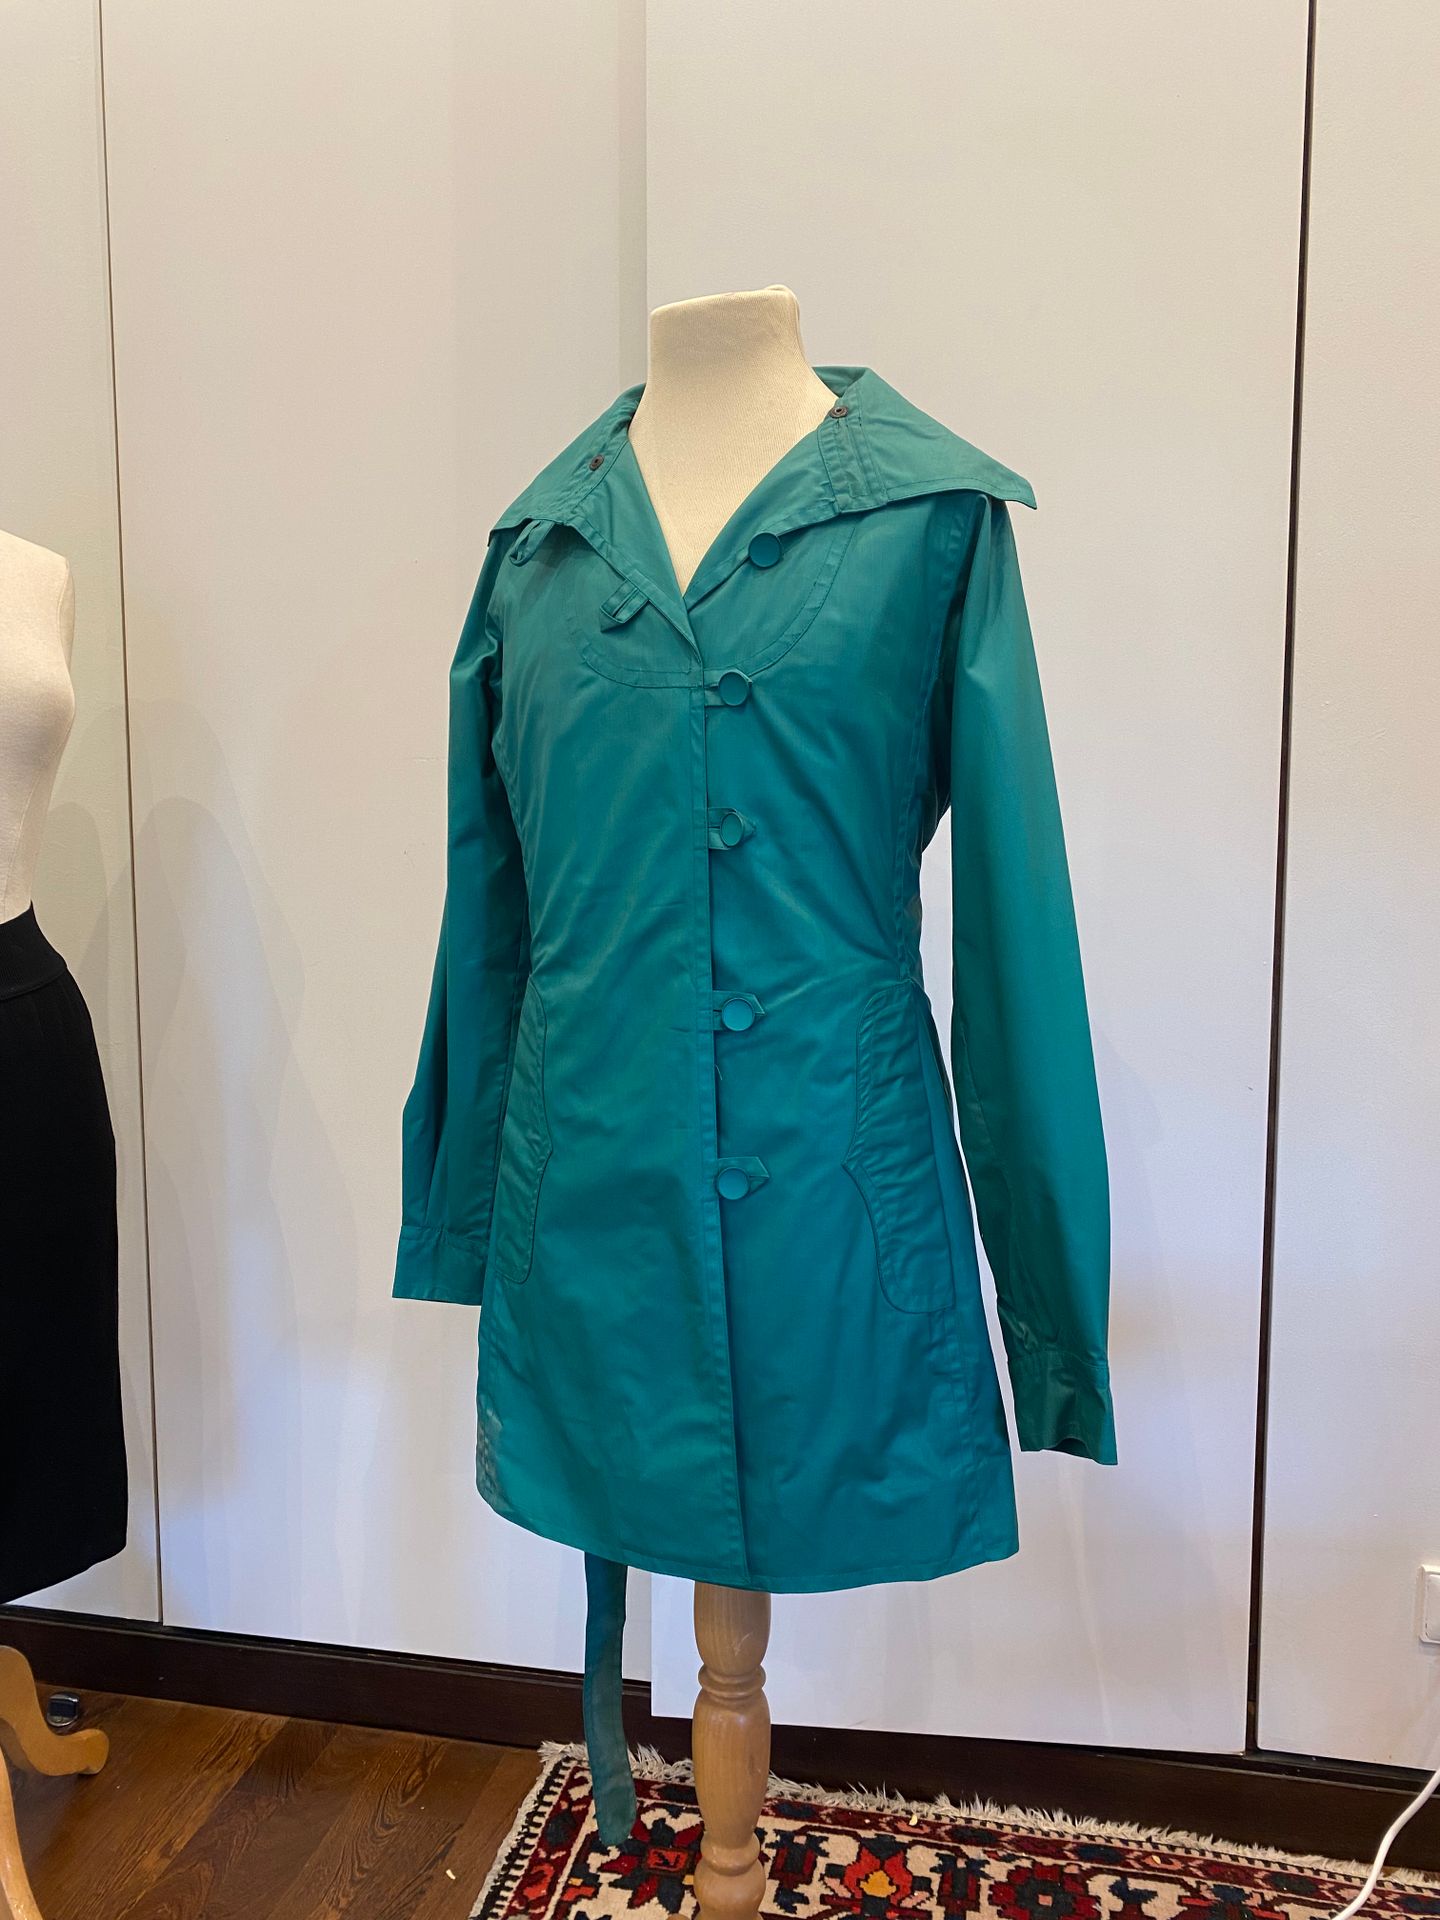 Null EMMANUEL UNGARO PARALLELELE, green raincoat, size XXS (missing the hood)